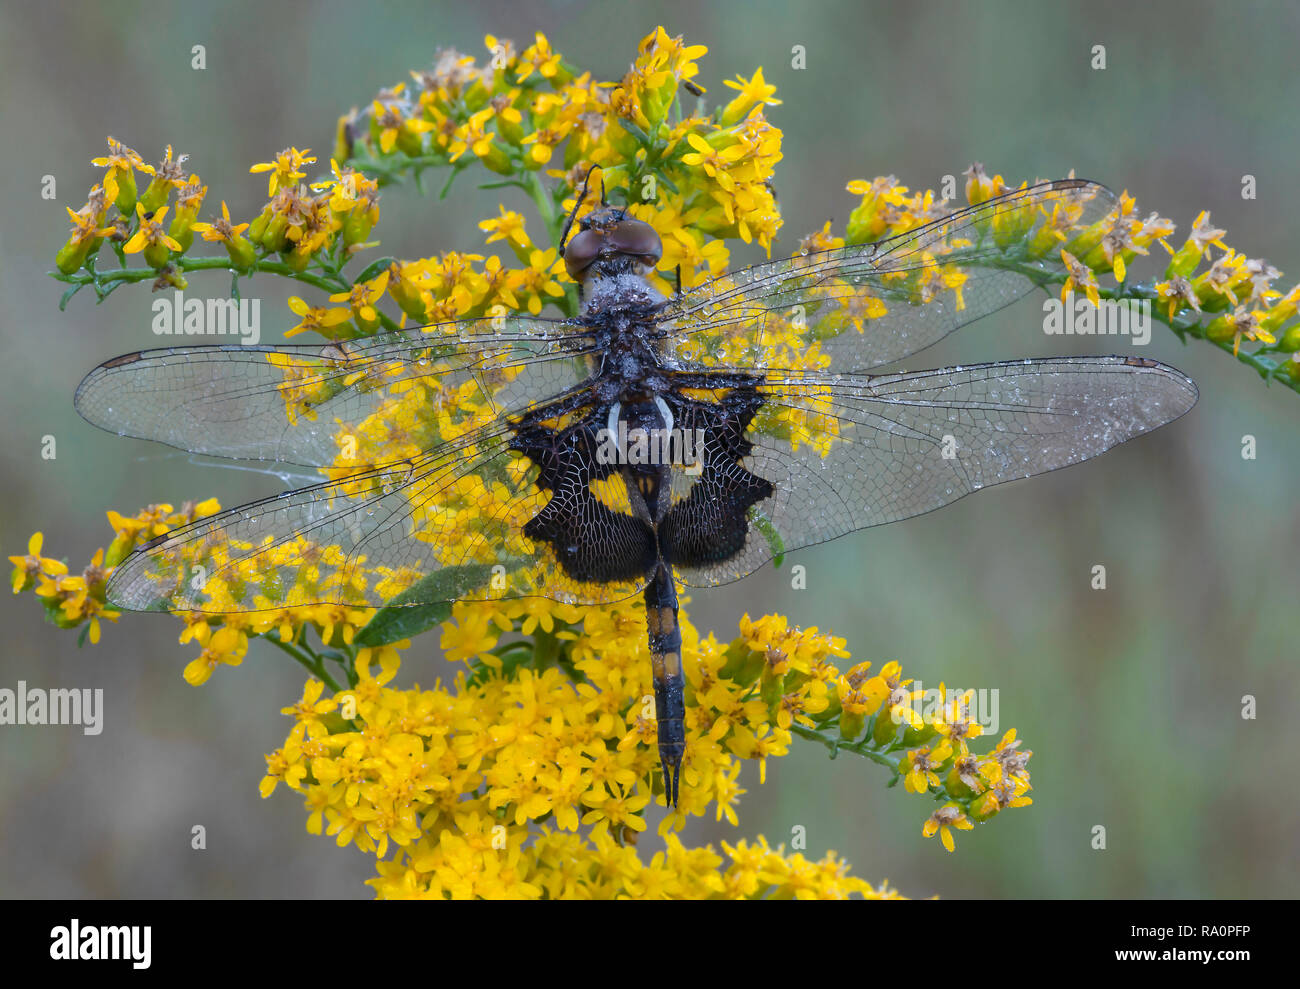 Alforjas Skimmer negro Dragonfly (Tramea lacerata), apoyándose en el Goldenrod, Otoño, E EE.UU., por omitir Moody/Dembinsky Foto Assoc Foto de stock